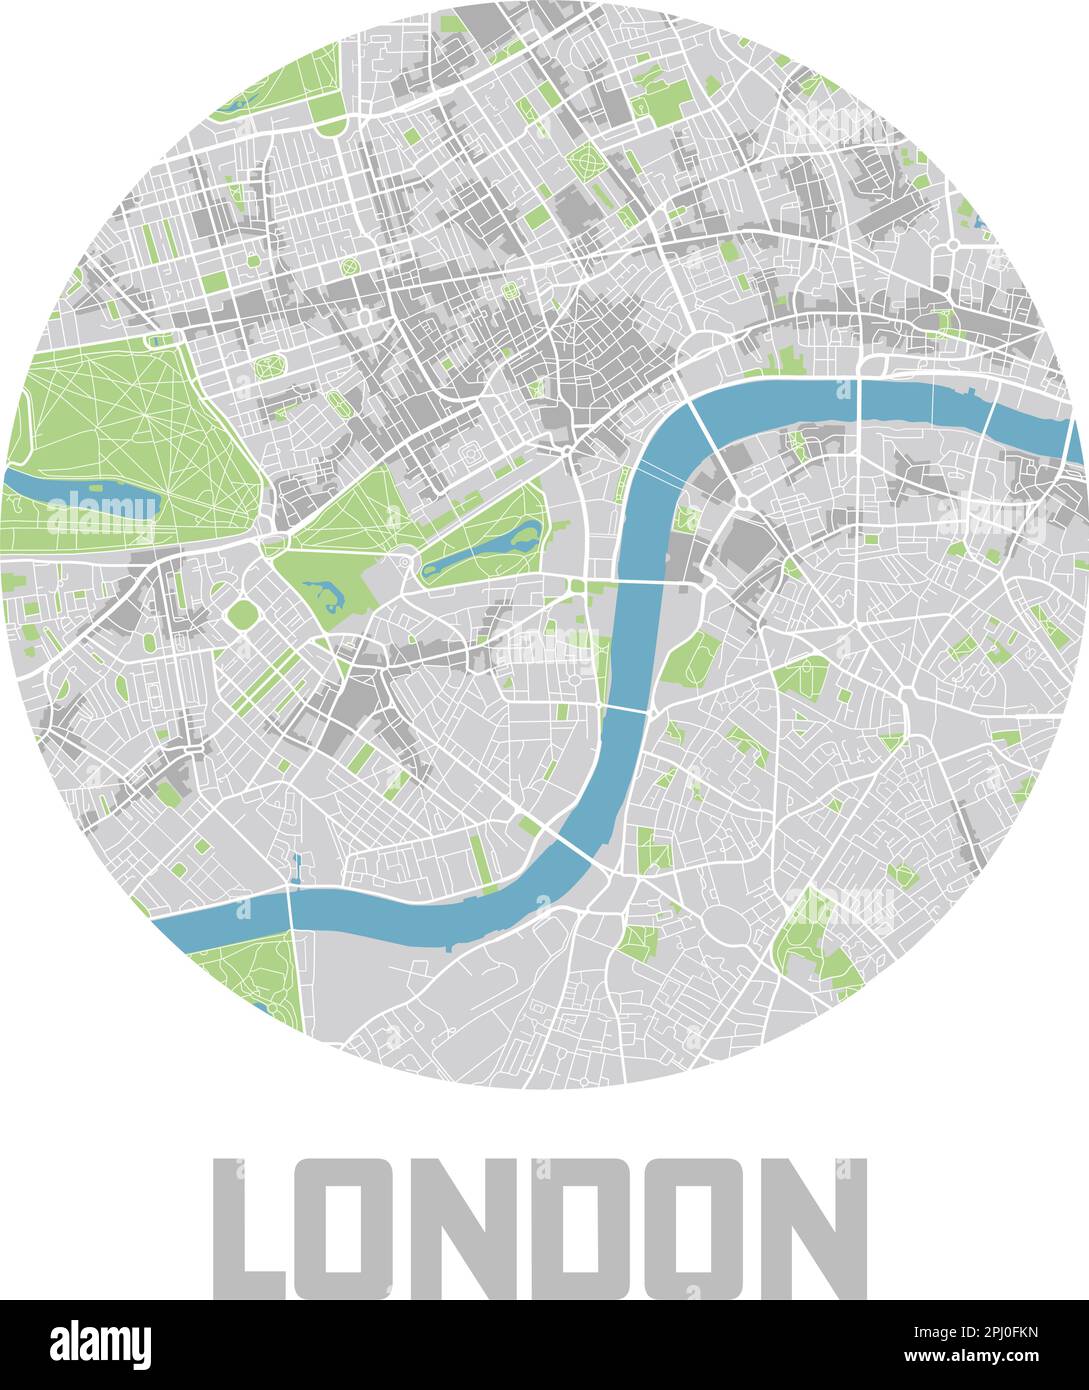 Minimalistic London city map icon. Stock Vector